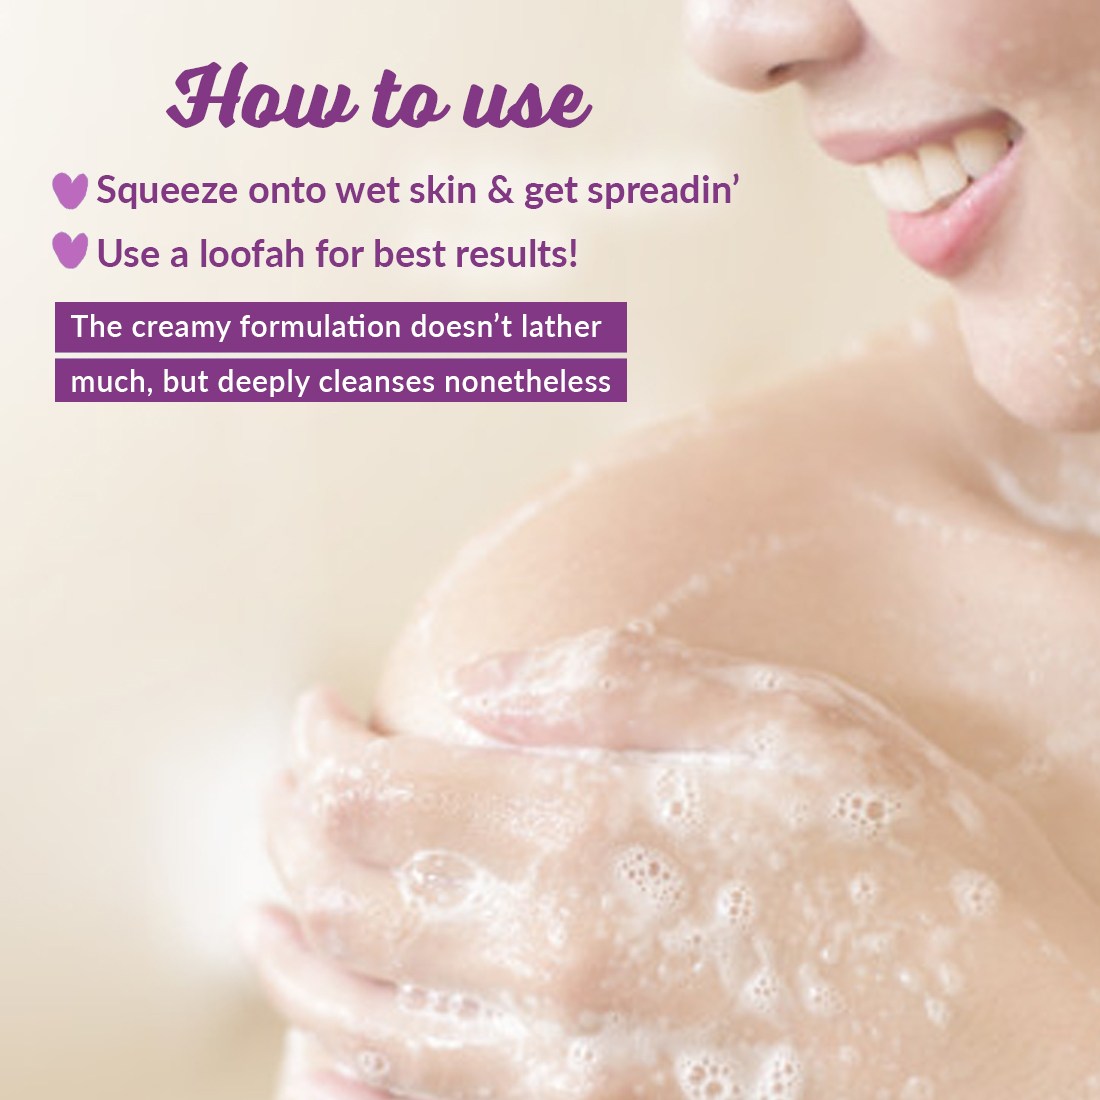 Plum BodyLovin' Vanilla Vibes Shower Cream (Body Wash)